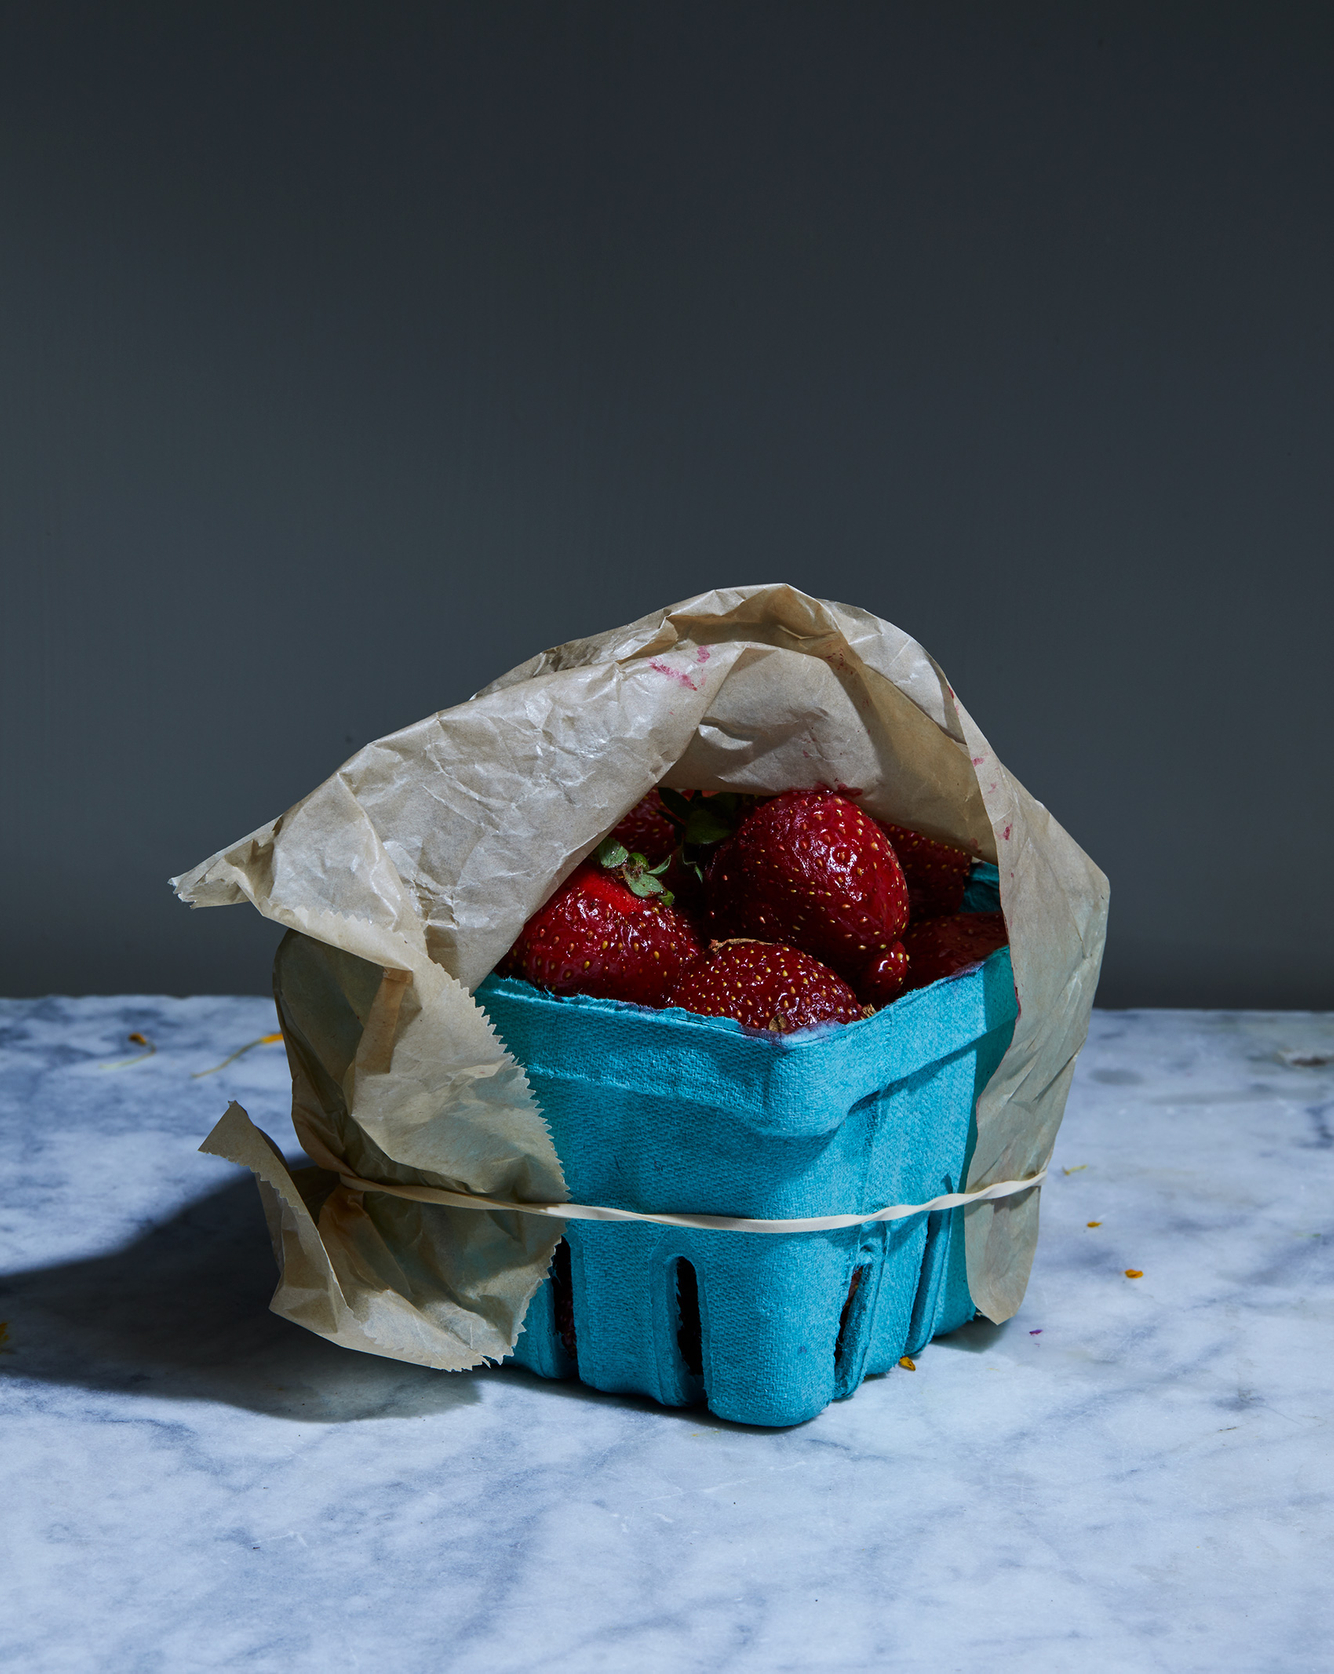 Joyful about strawberries, intimate fruit portrait 